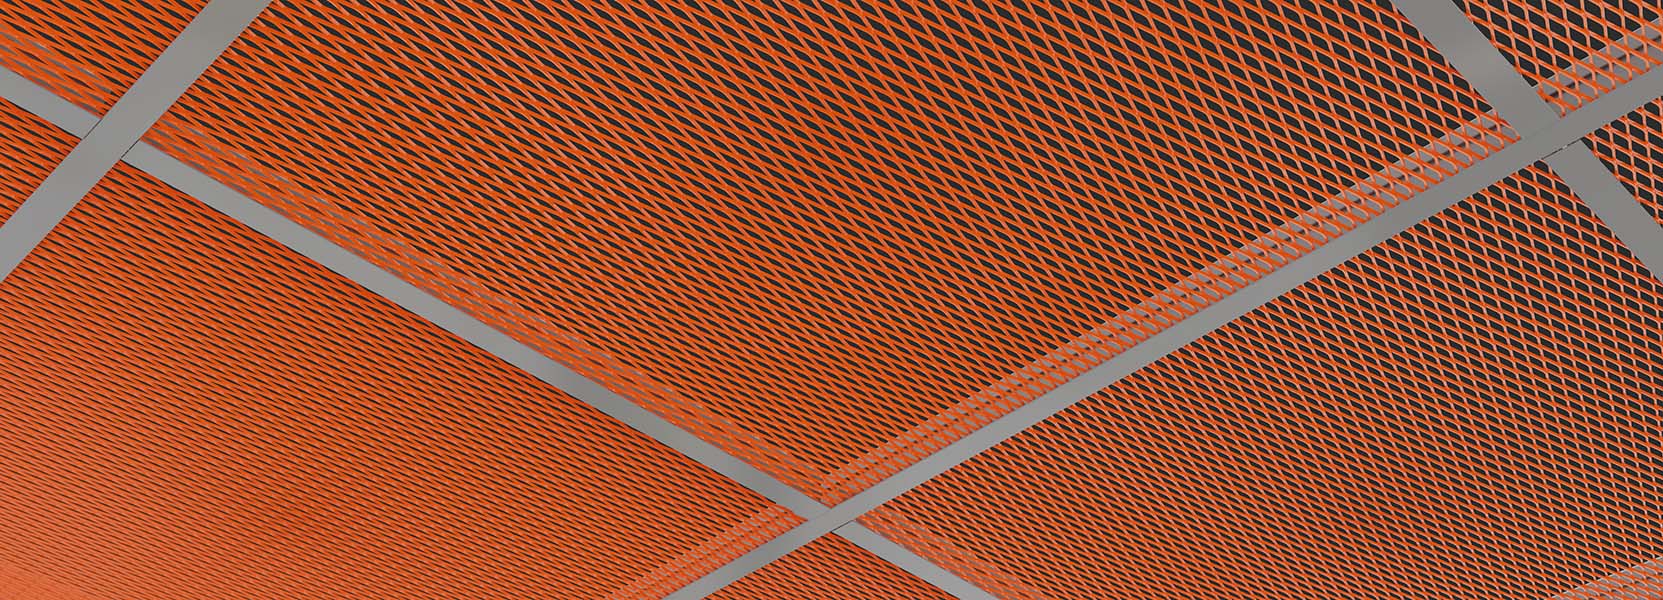 Zentia DecoMesh - grey grid and orange tile